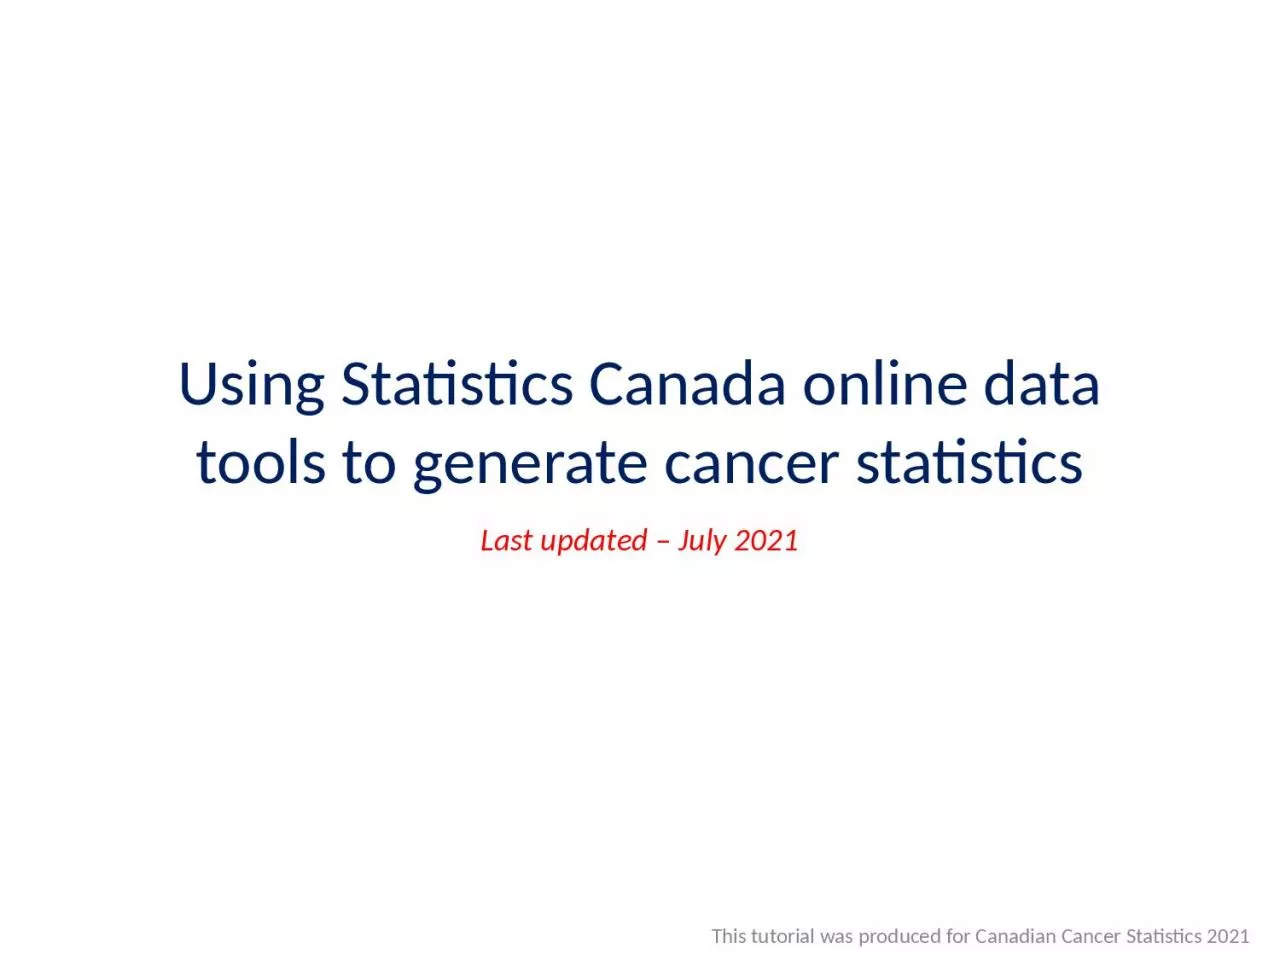 Using Statistics Canada online data tools to generate cancer statistics